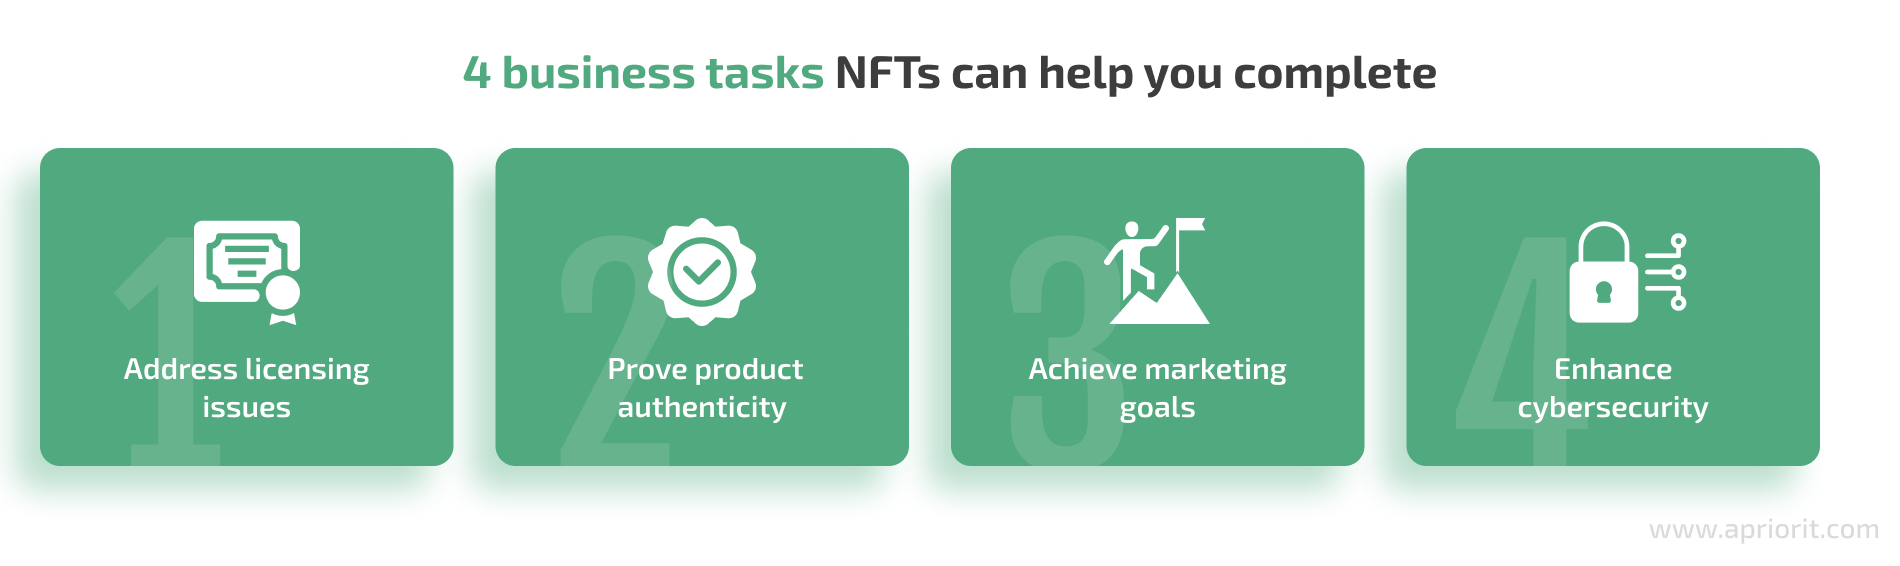 business tasks nfts can help complete